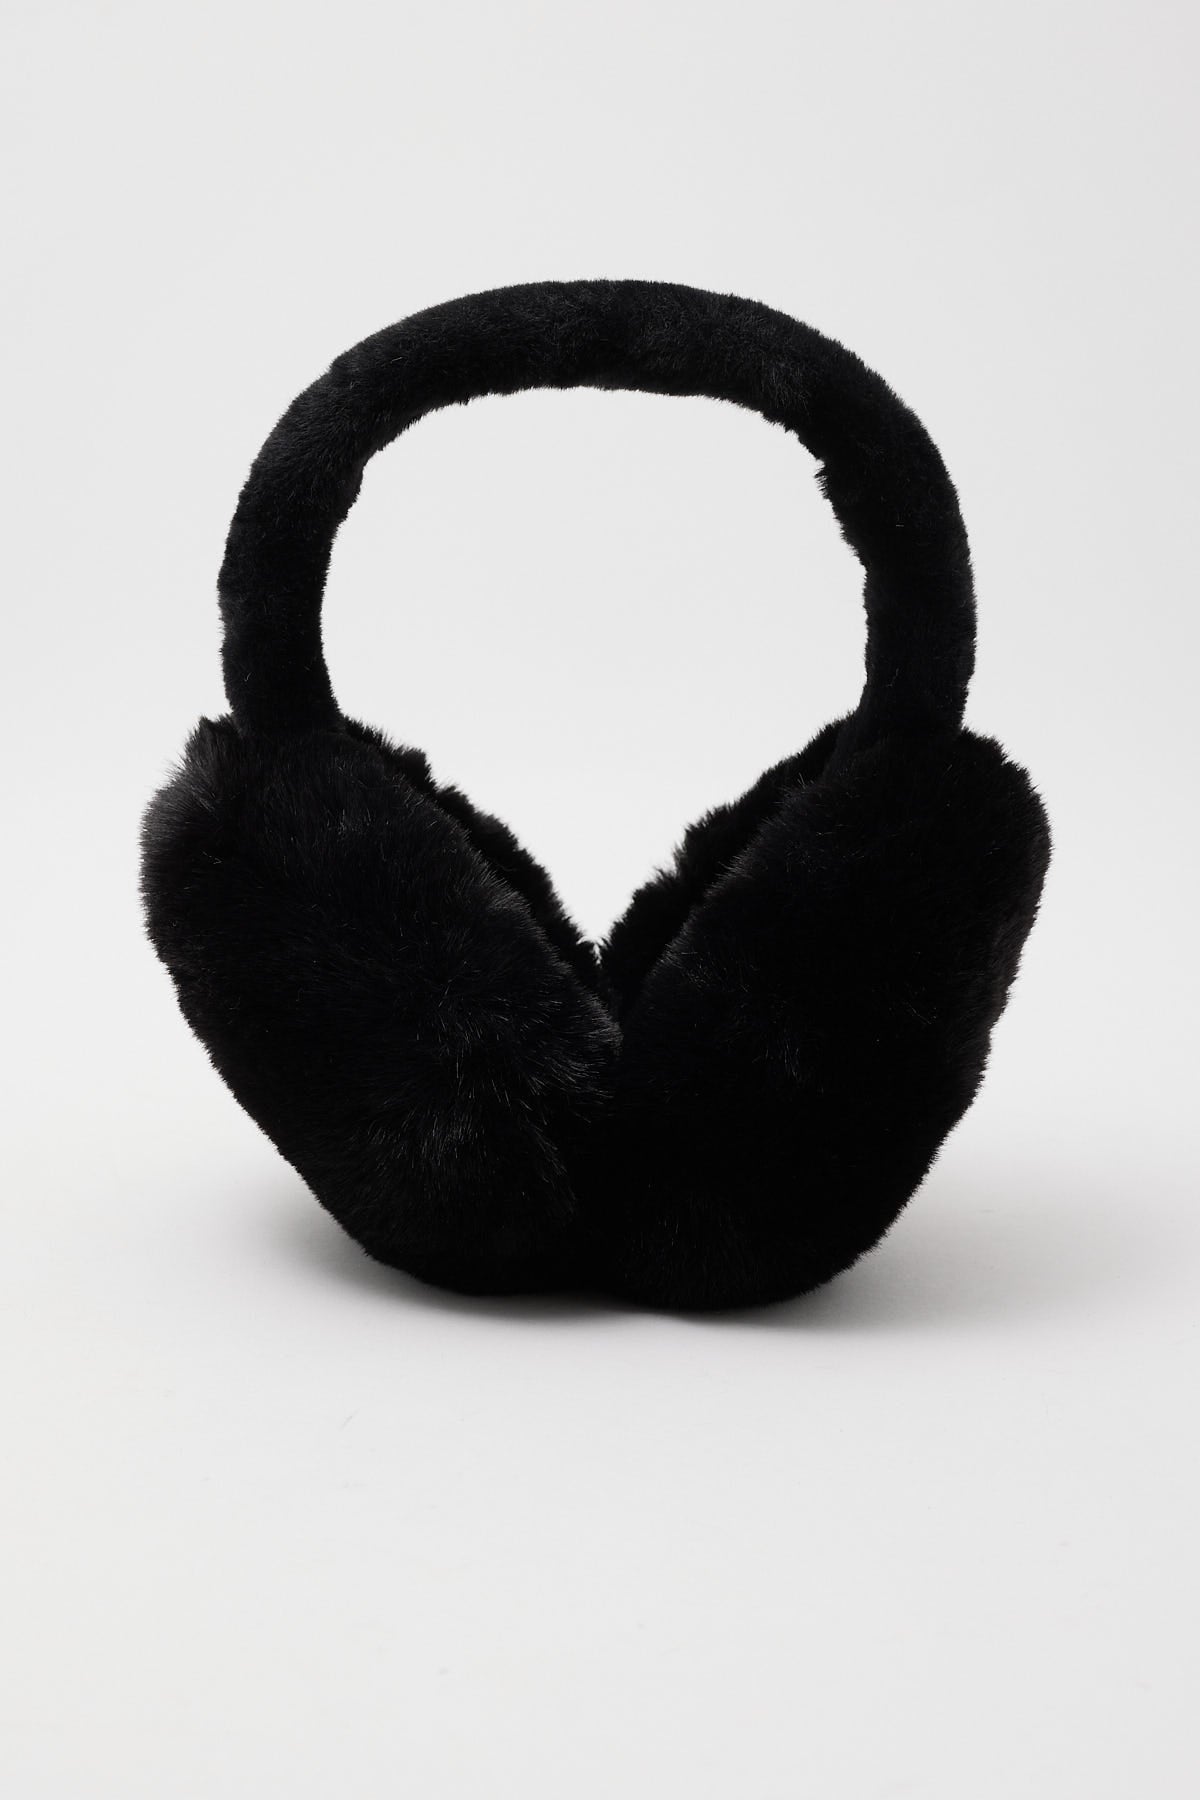 Token Antarctic Ear Muffs Black